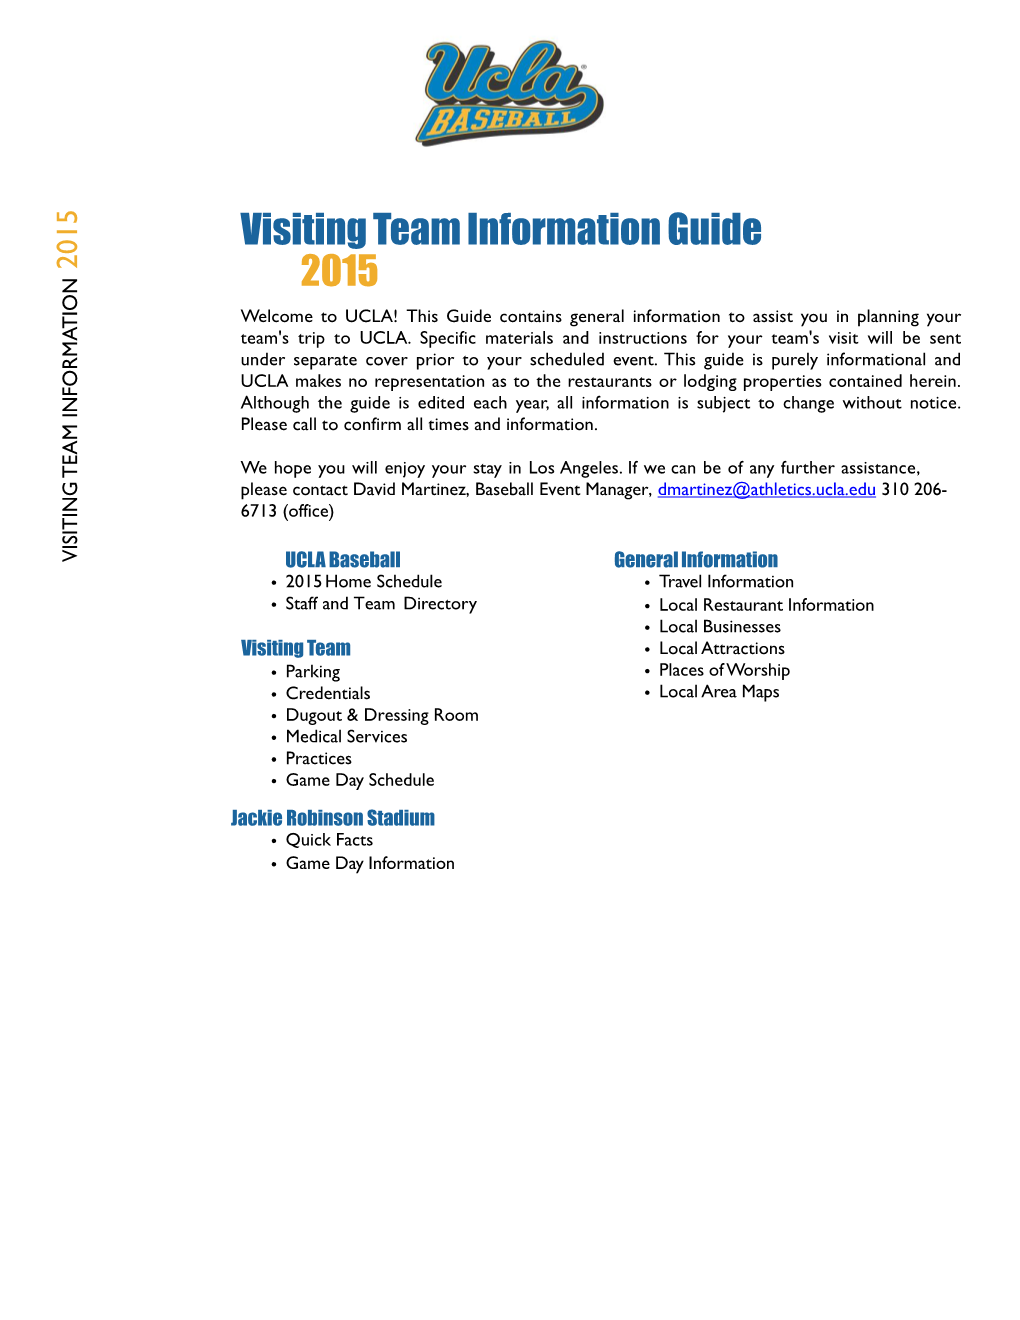 Visiting Team Information Guide 2015